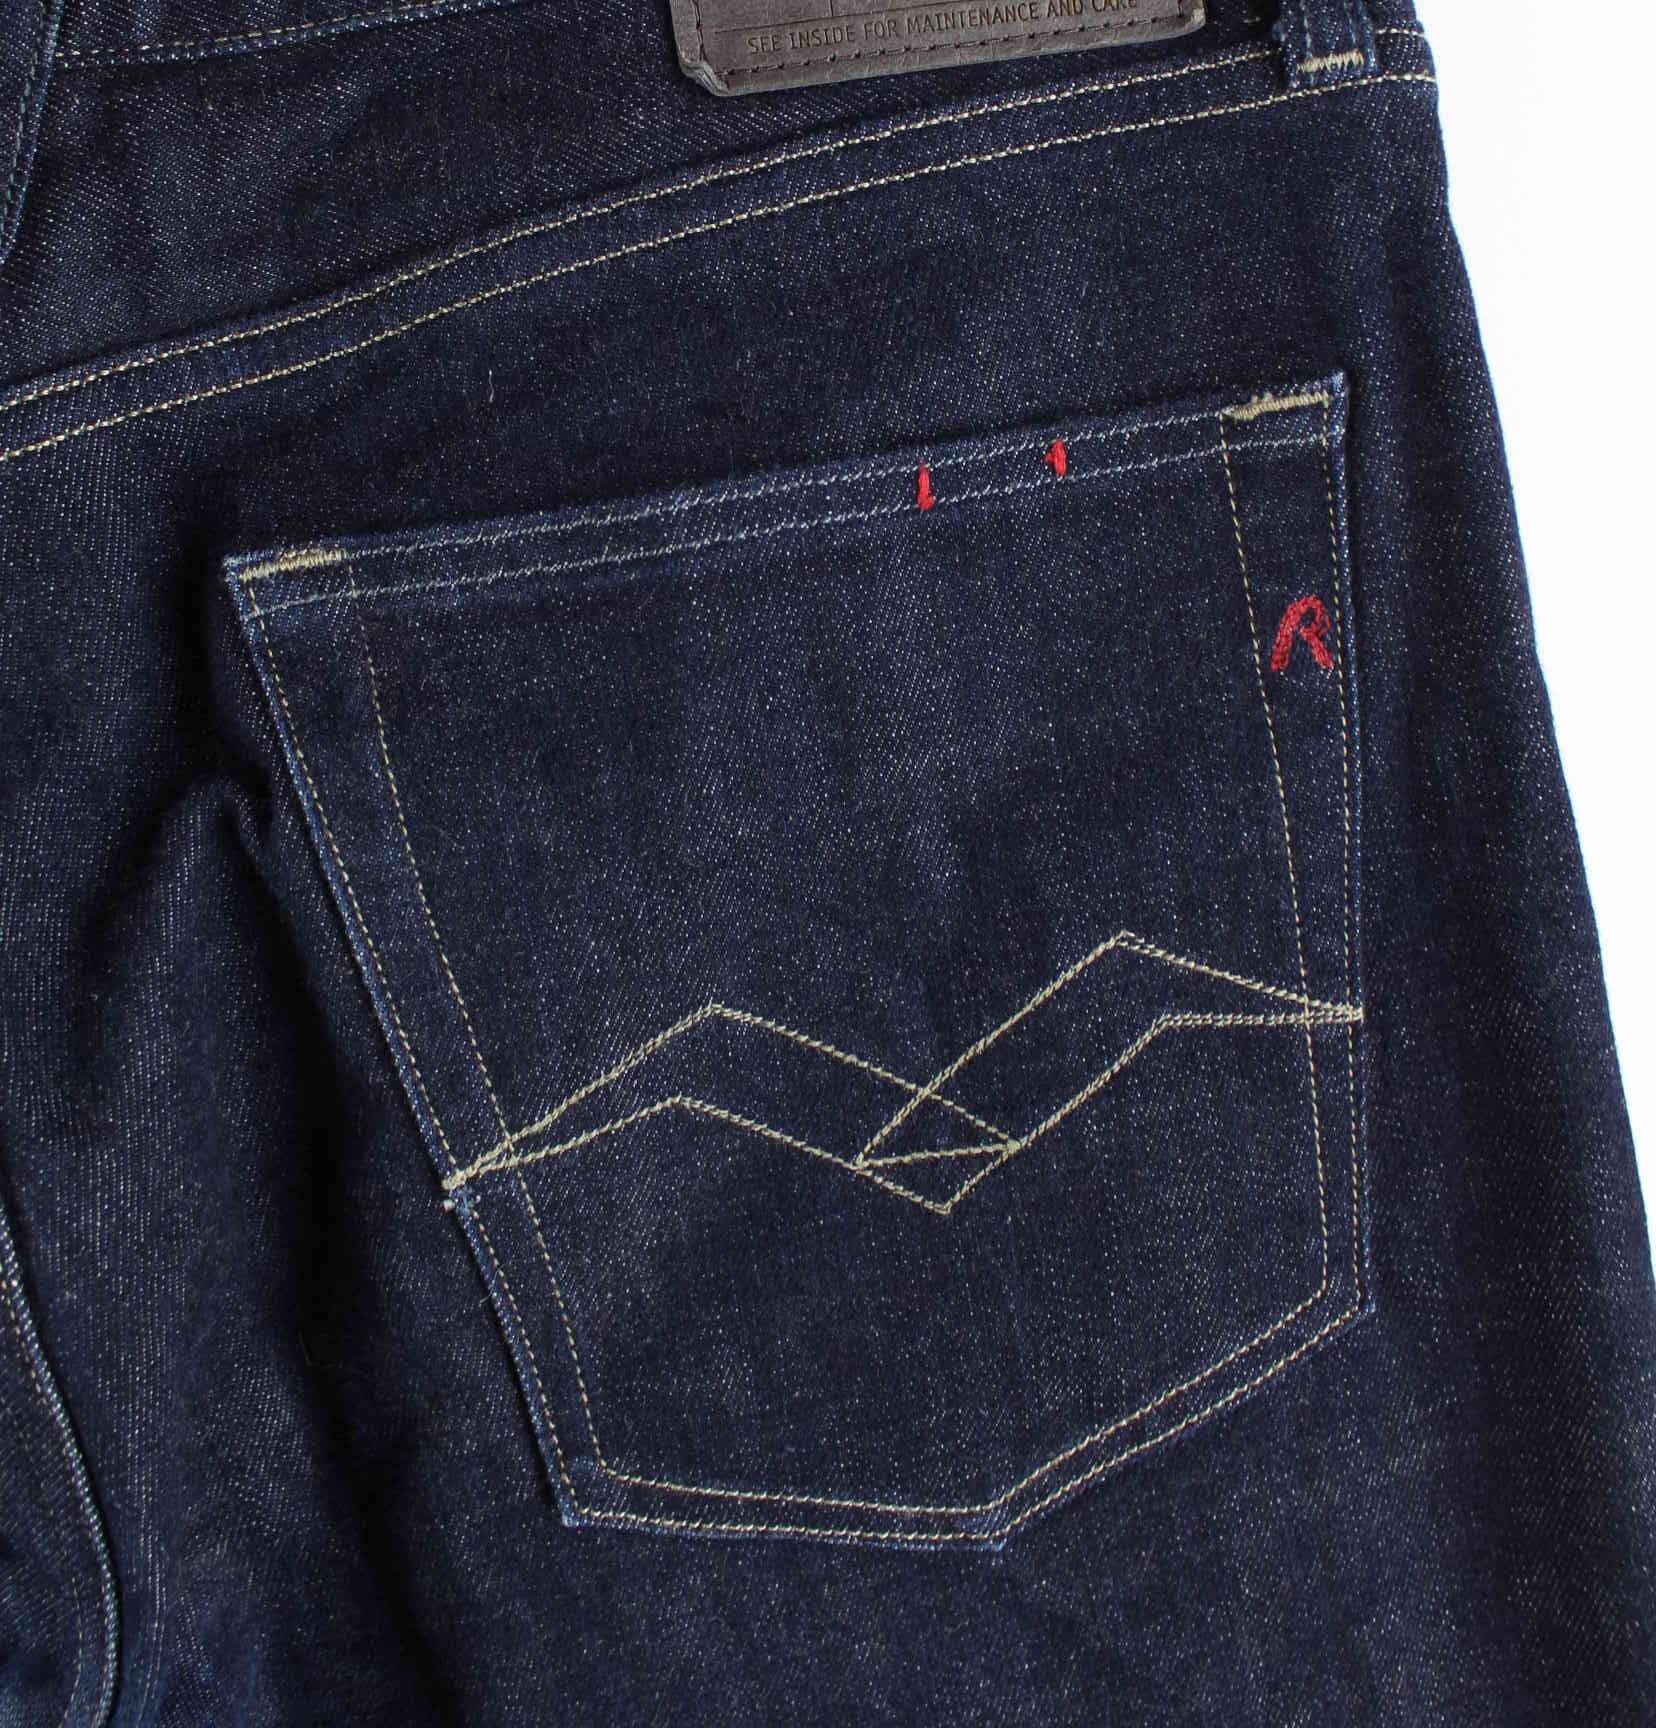 Replay Jeans Blau W34 L32 (detail image 1)